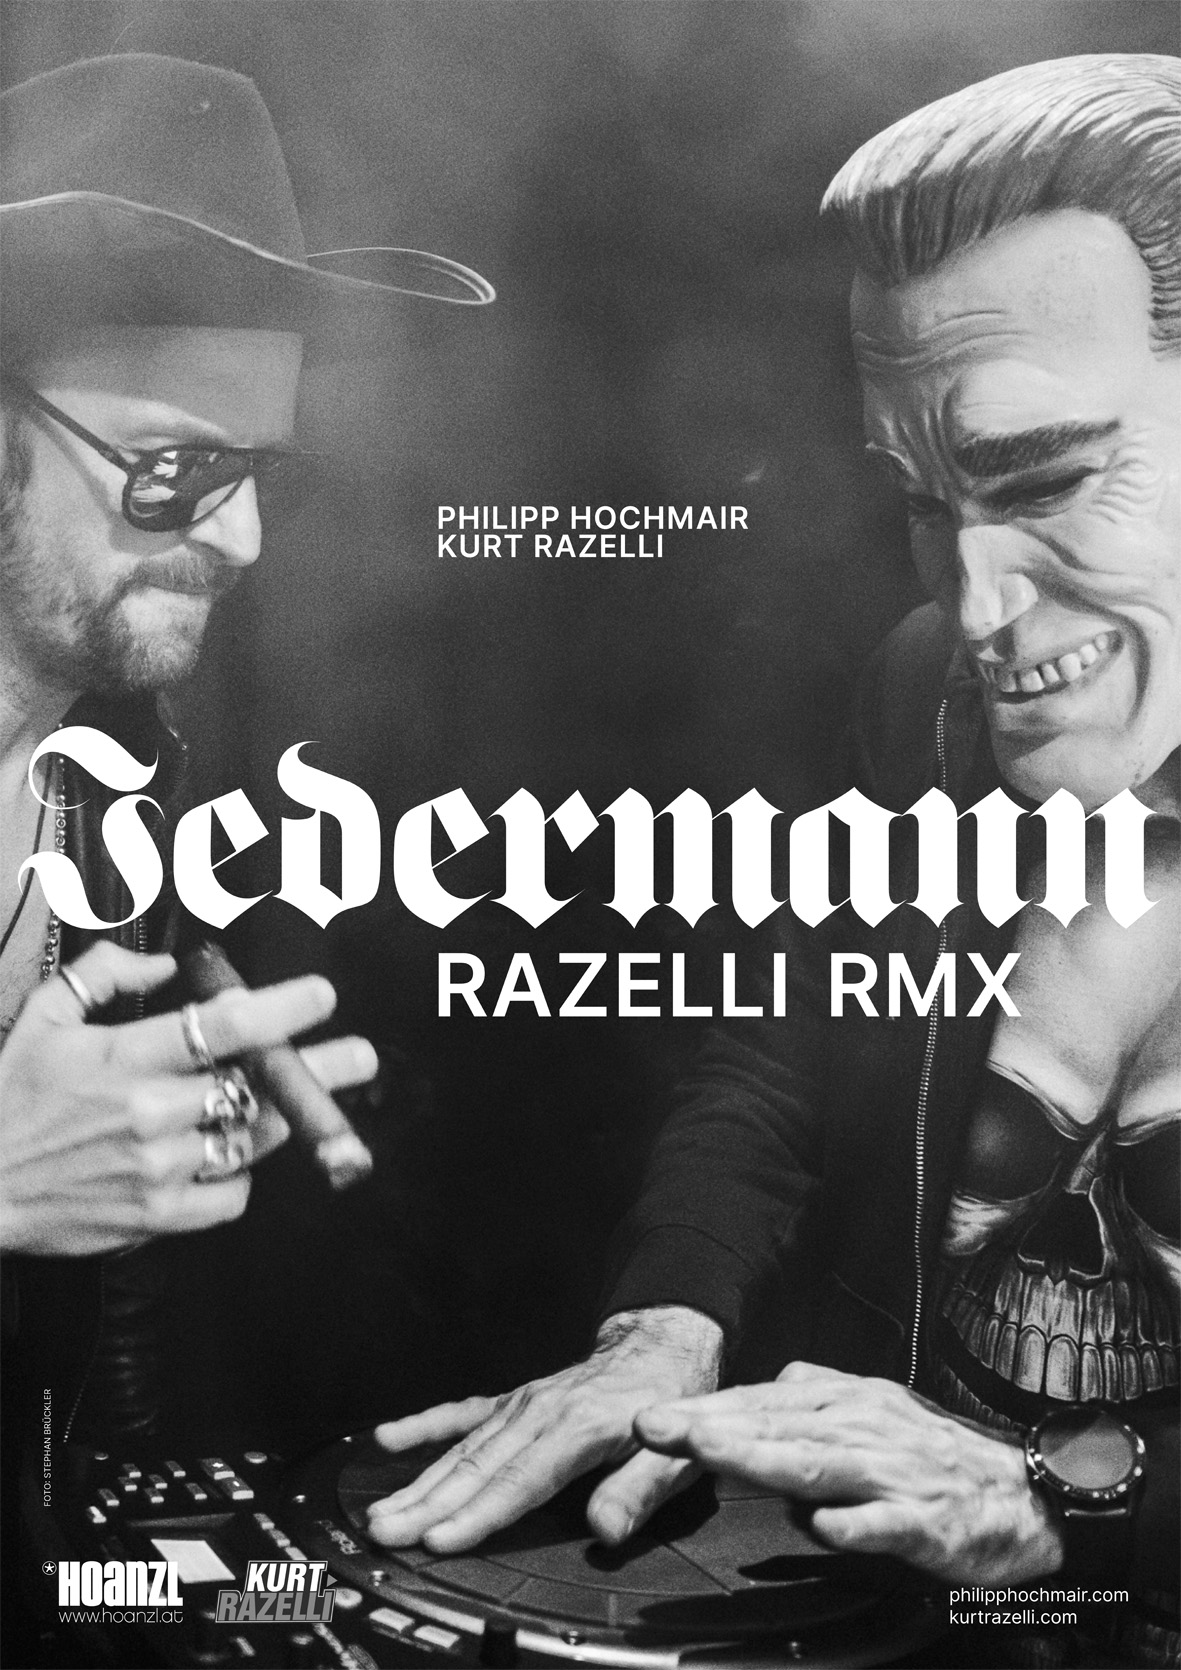 Philipp Hochmair & Kurt Razelli - Jedermann Razelli RMX am 18. March 2023 @ Stadtsaal Wien.